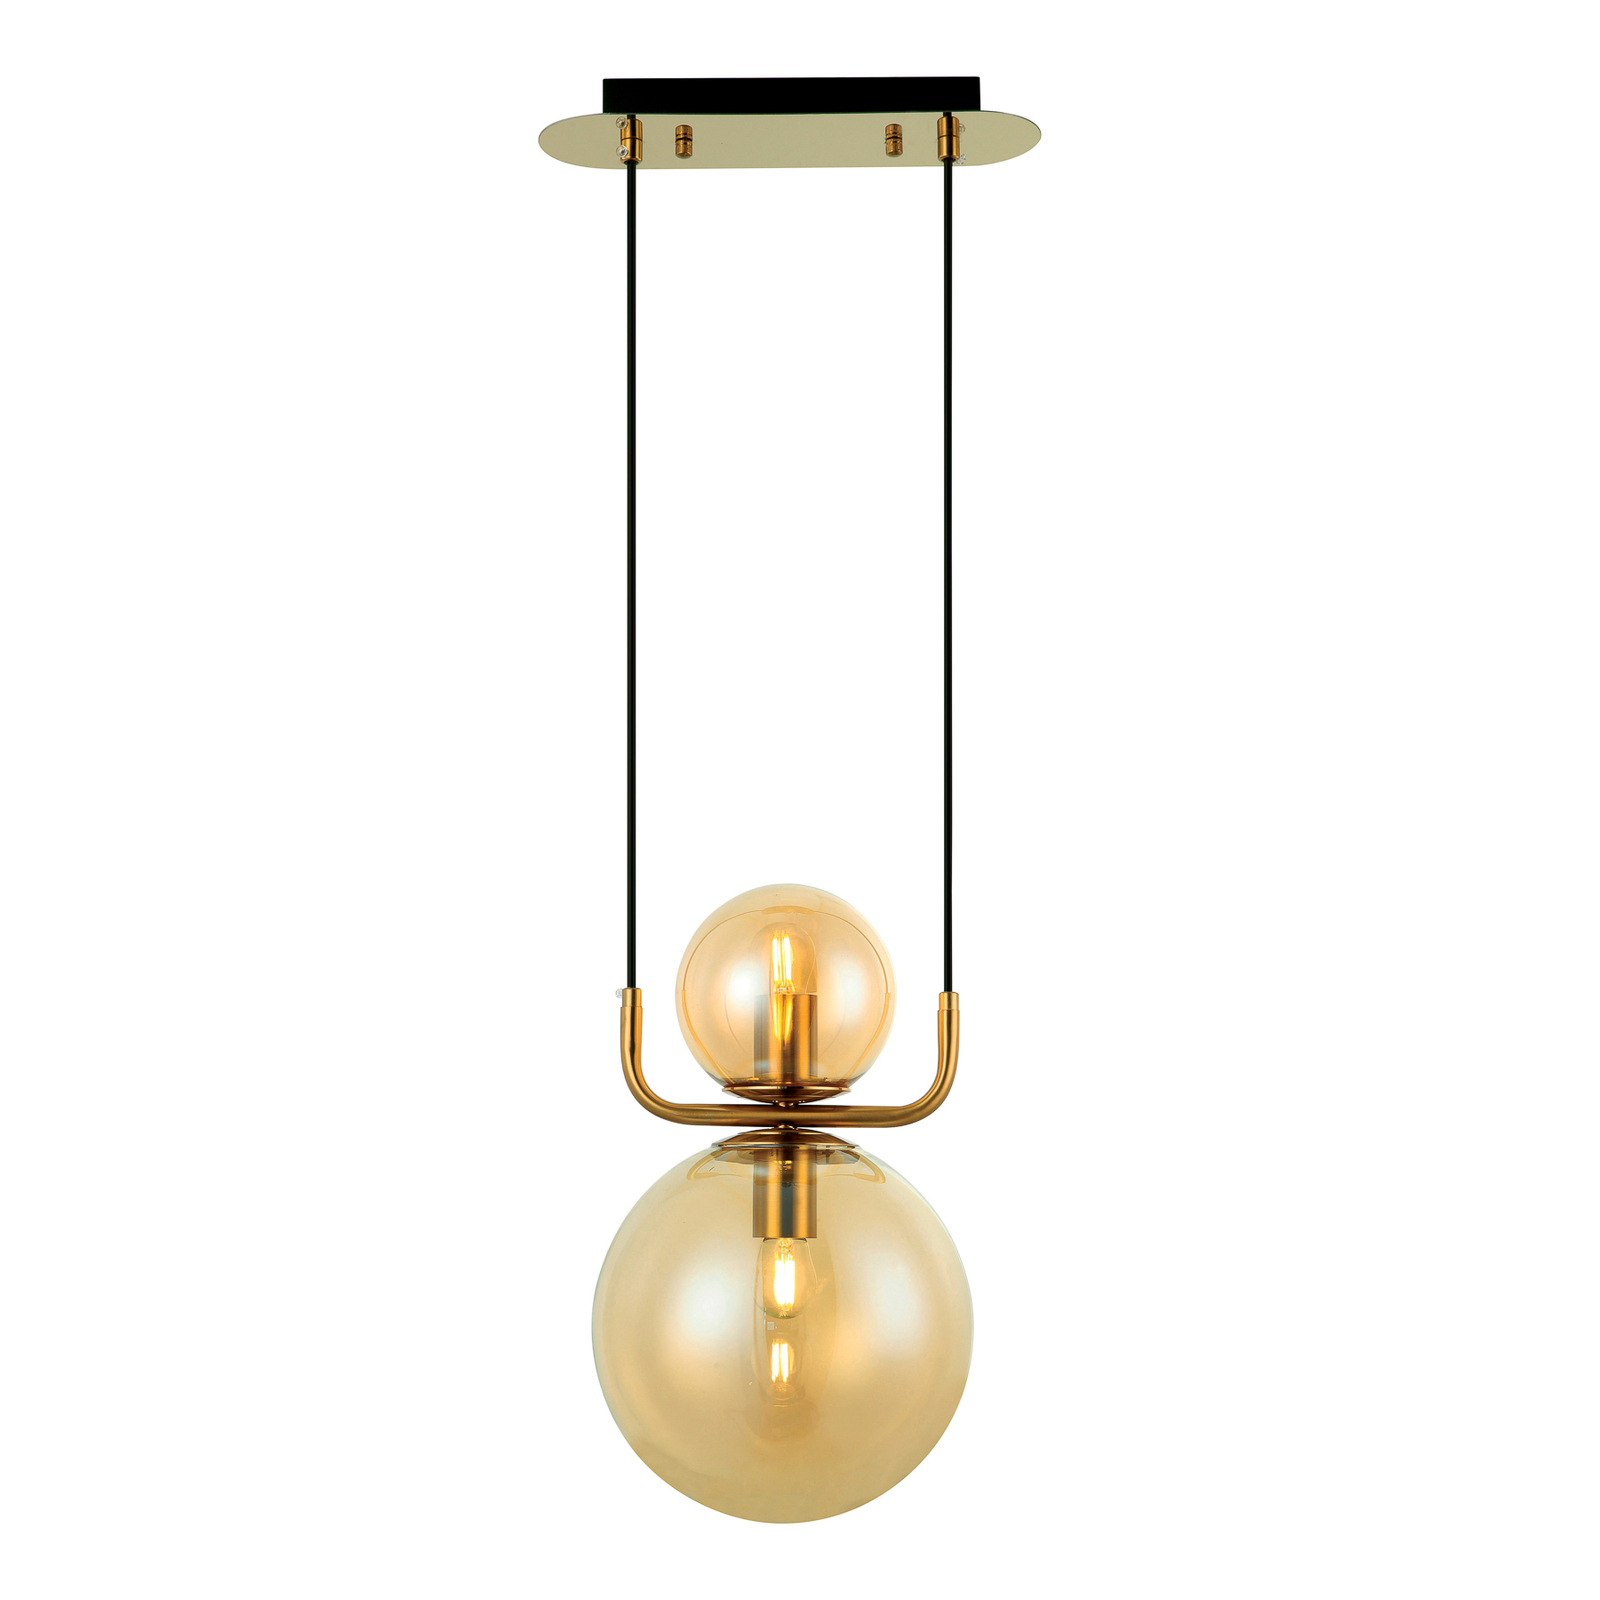 Mira hanging light, vintage style 2-bulb gold